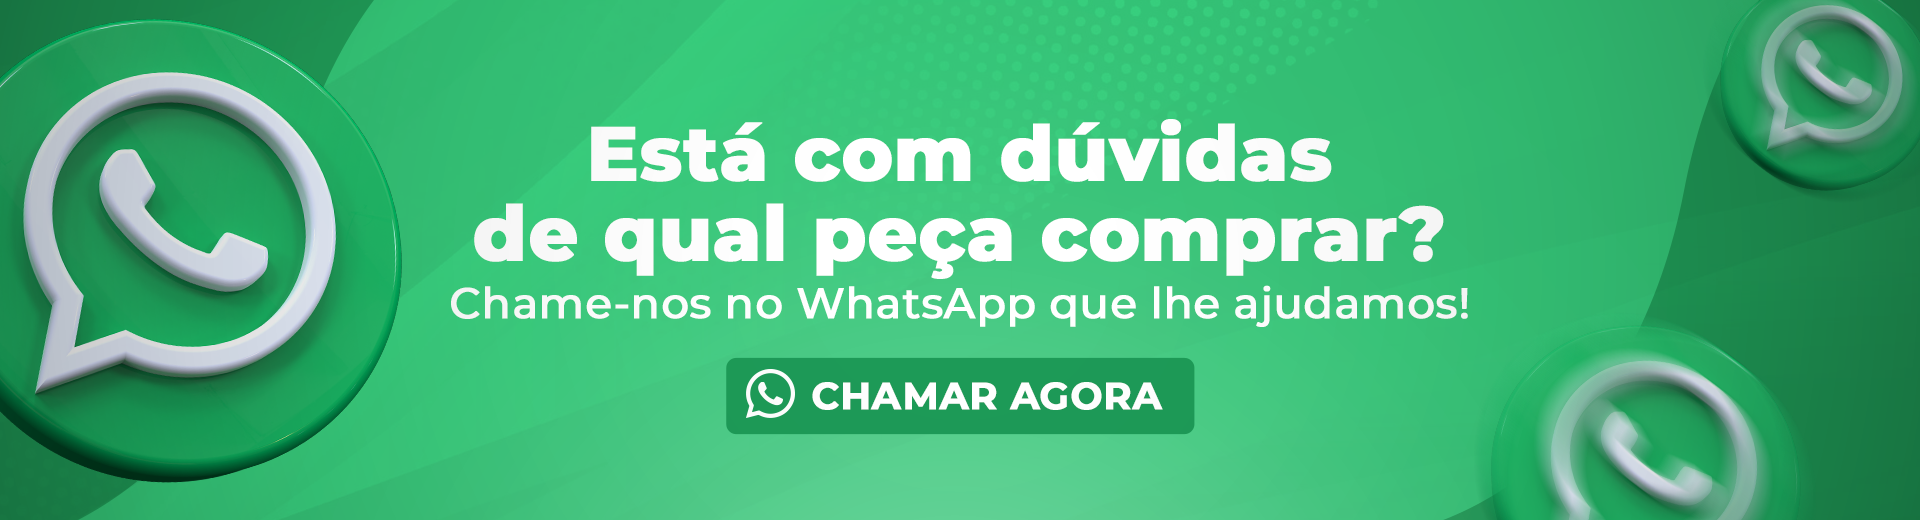 Chama no Whatsapp